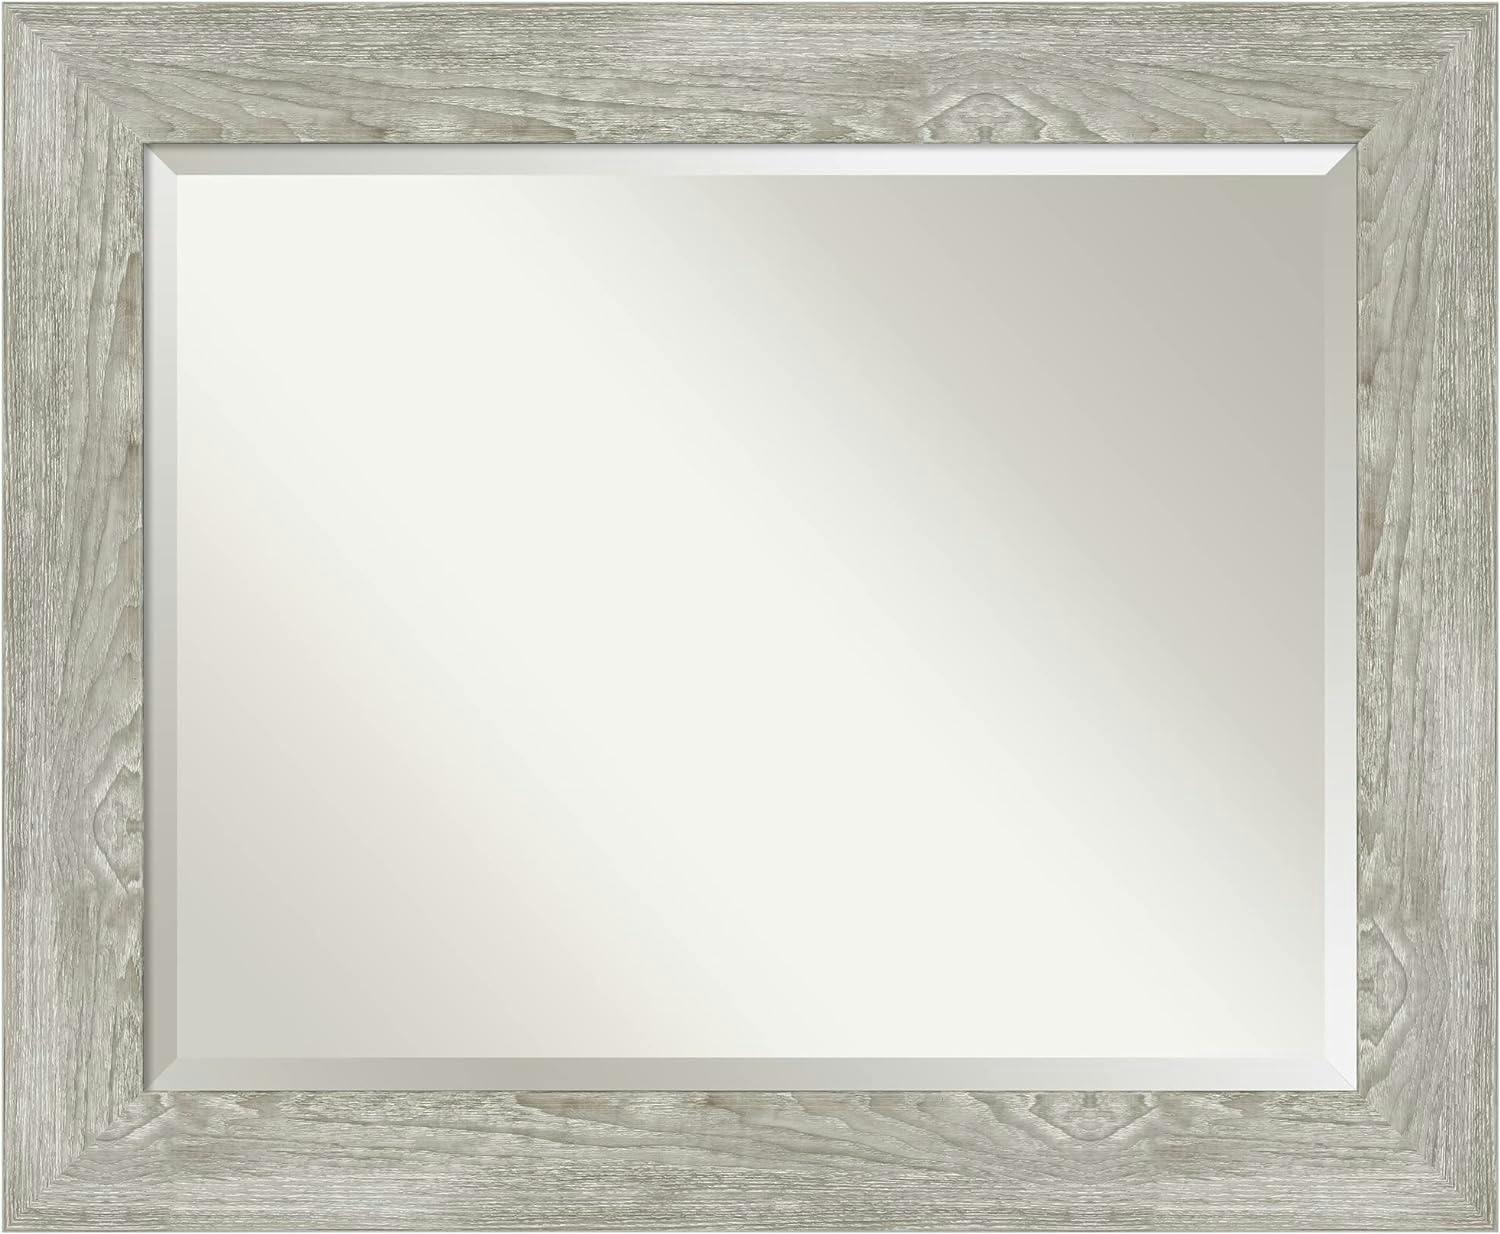 Dove Greywash Rectangular Wood Bathroom Vanity Mirror